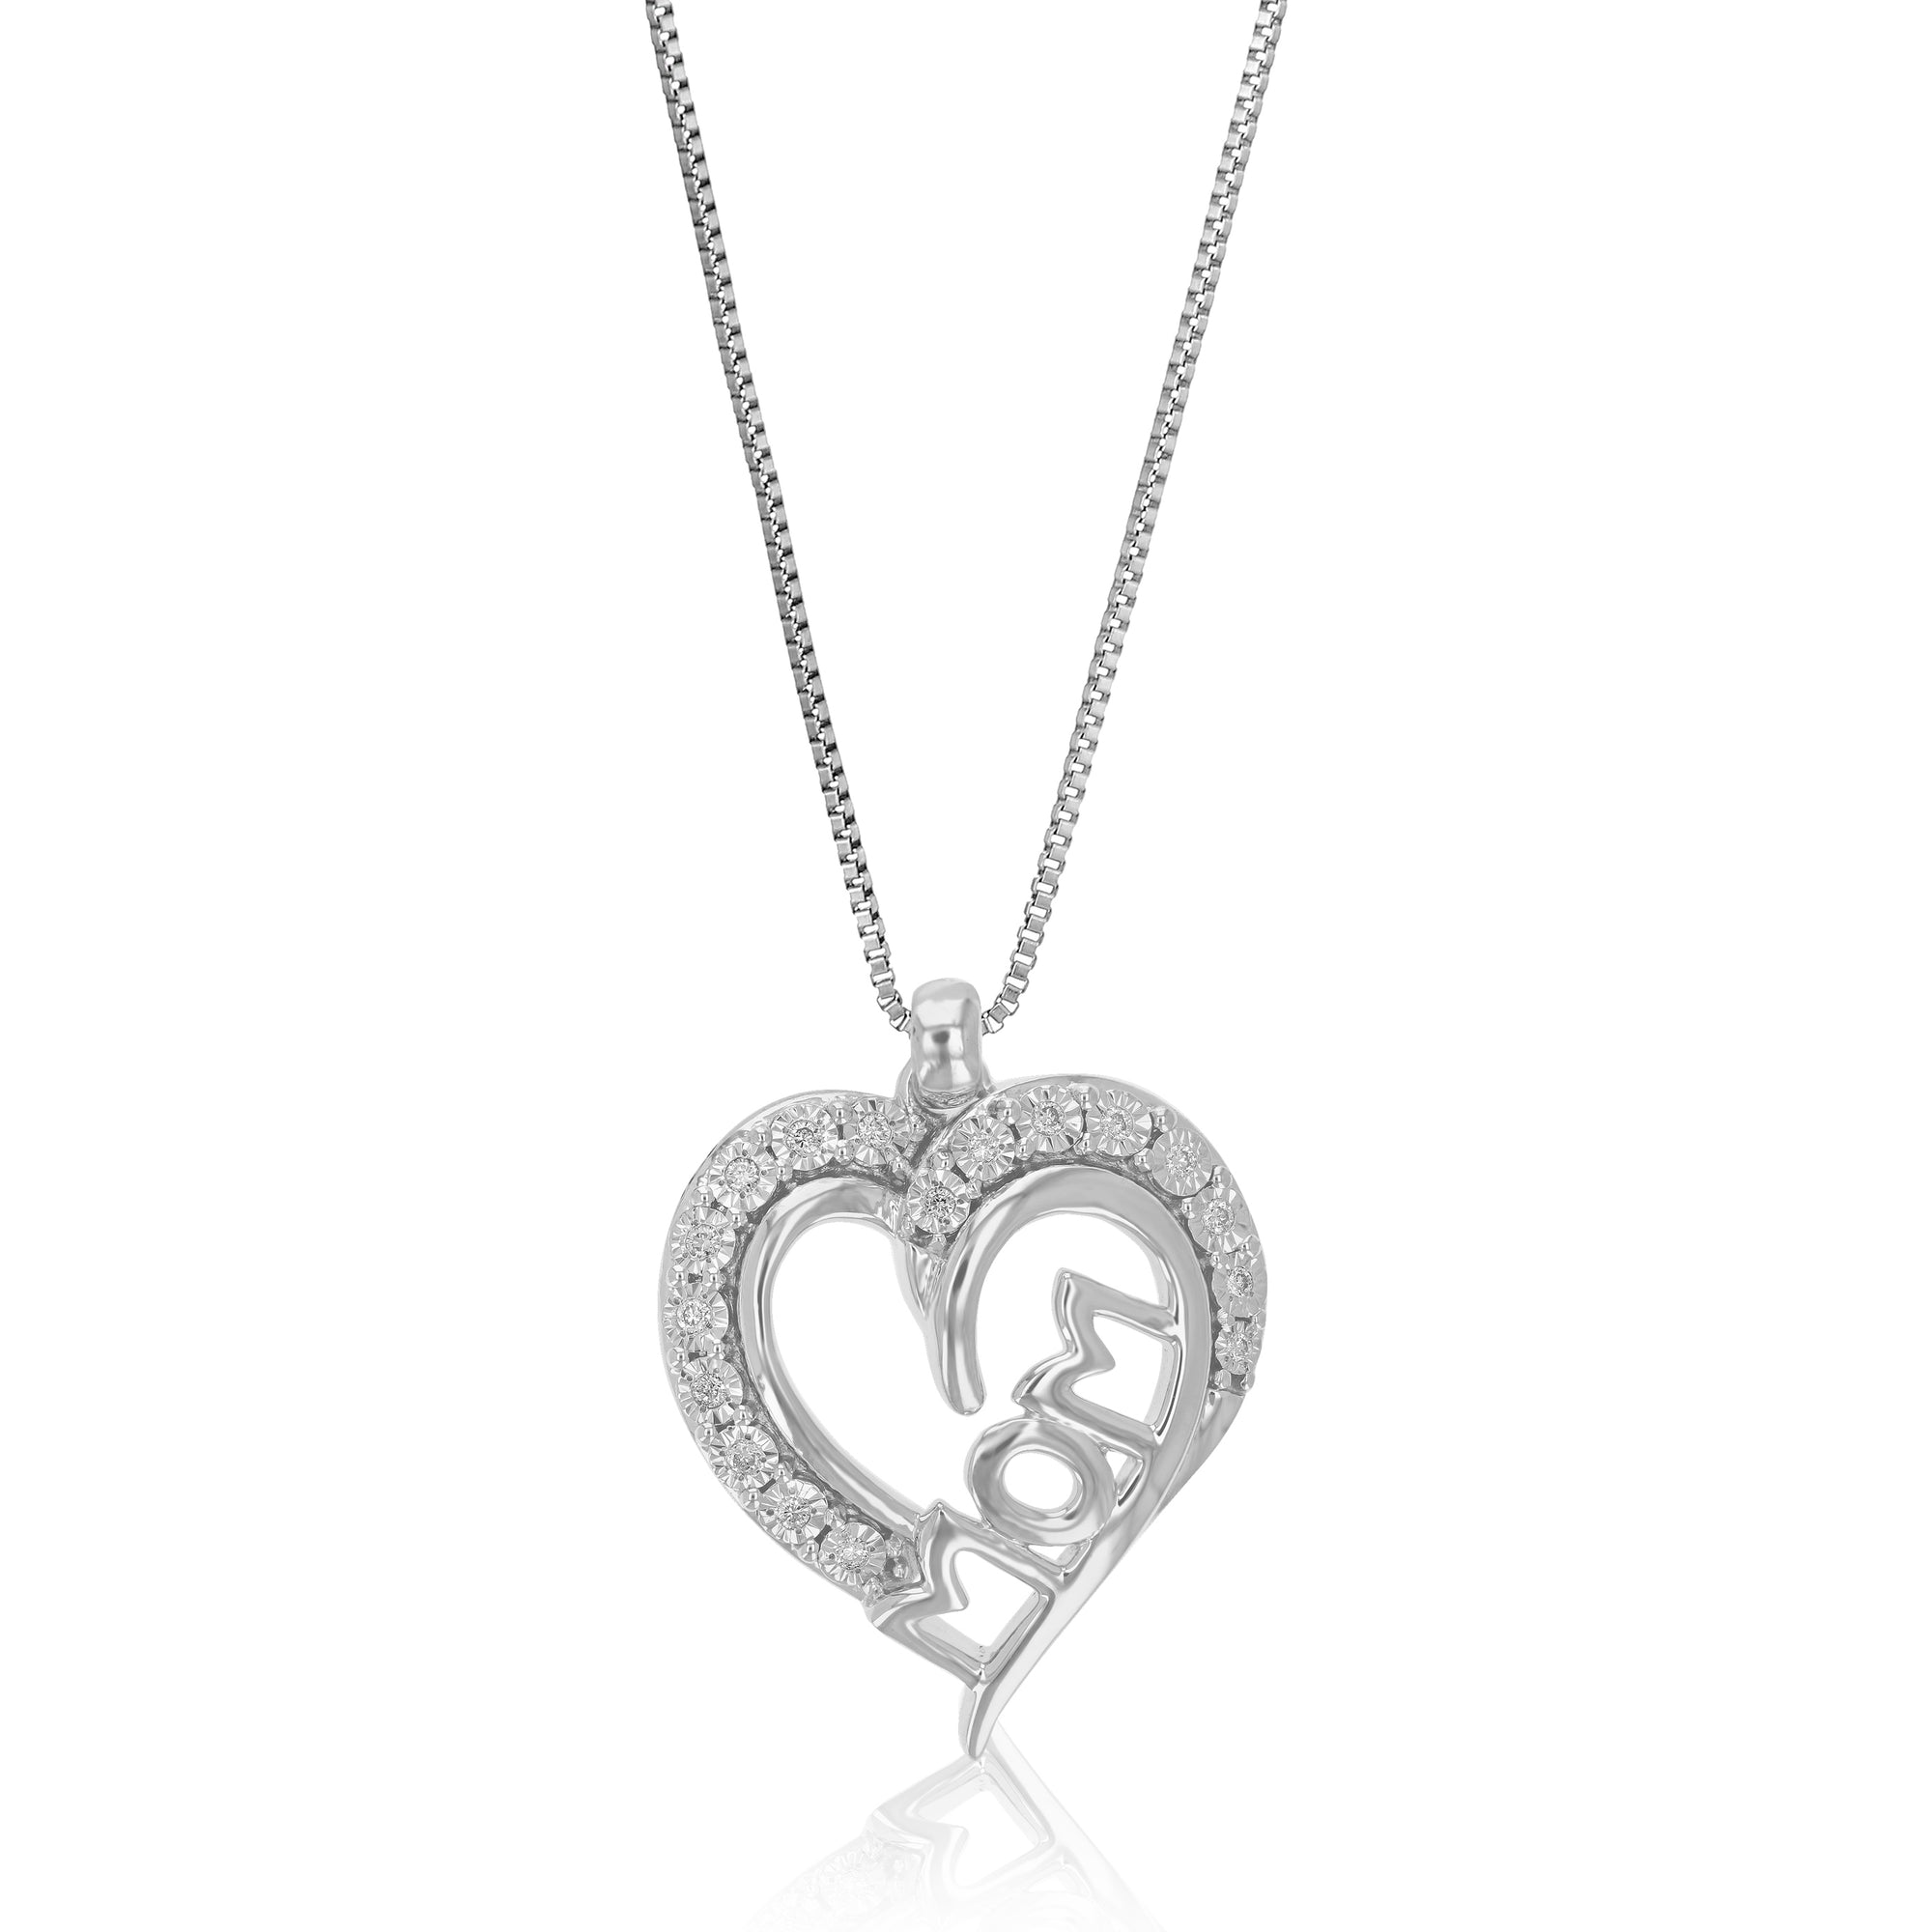 1/10 cttw Diamond Pendant Necklace for Women, Lab Grown Diamond Pendant Necklace in .925 Sterling Silver with Chain, Size 1/2 Inch